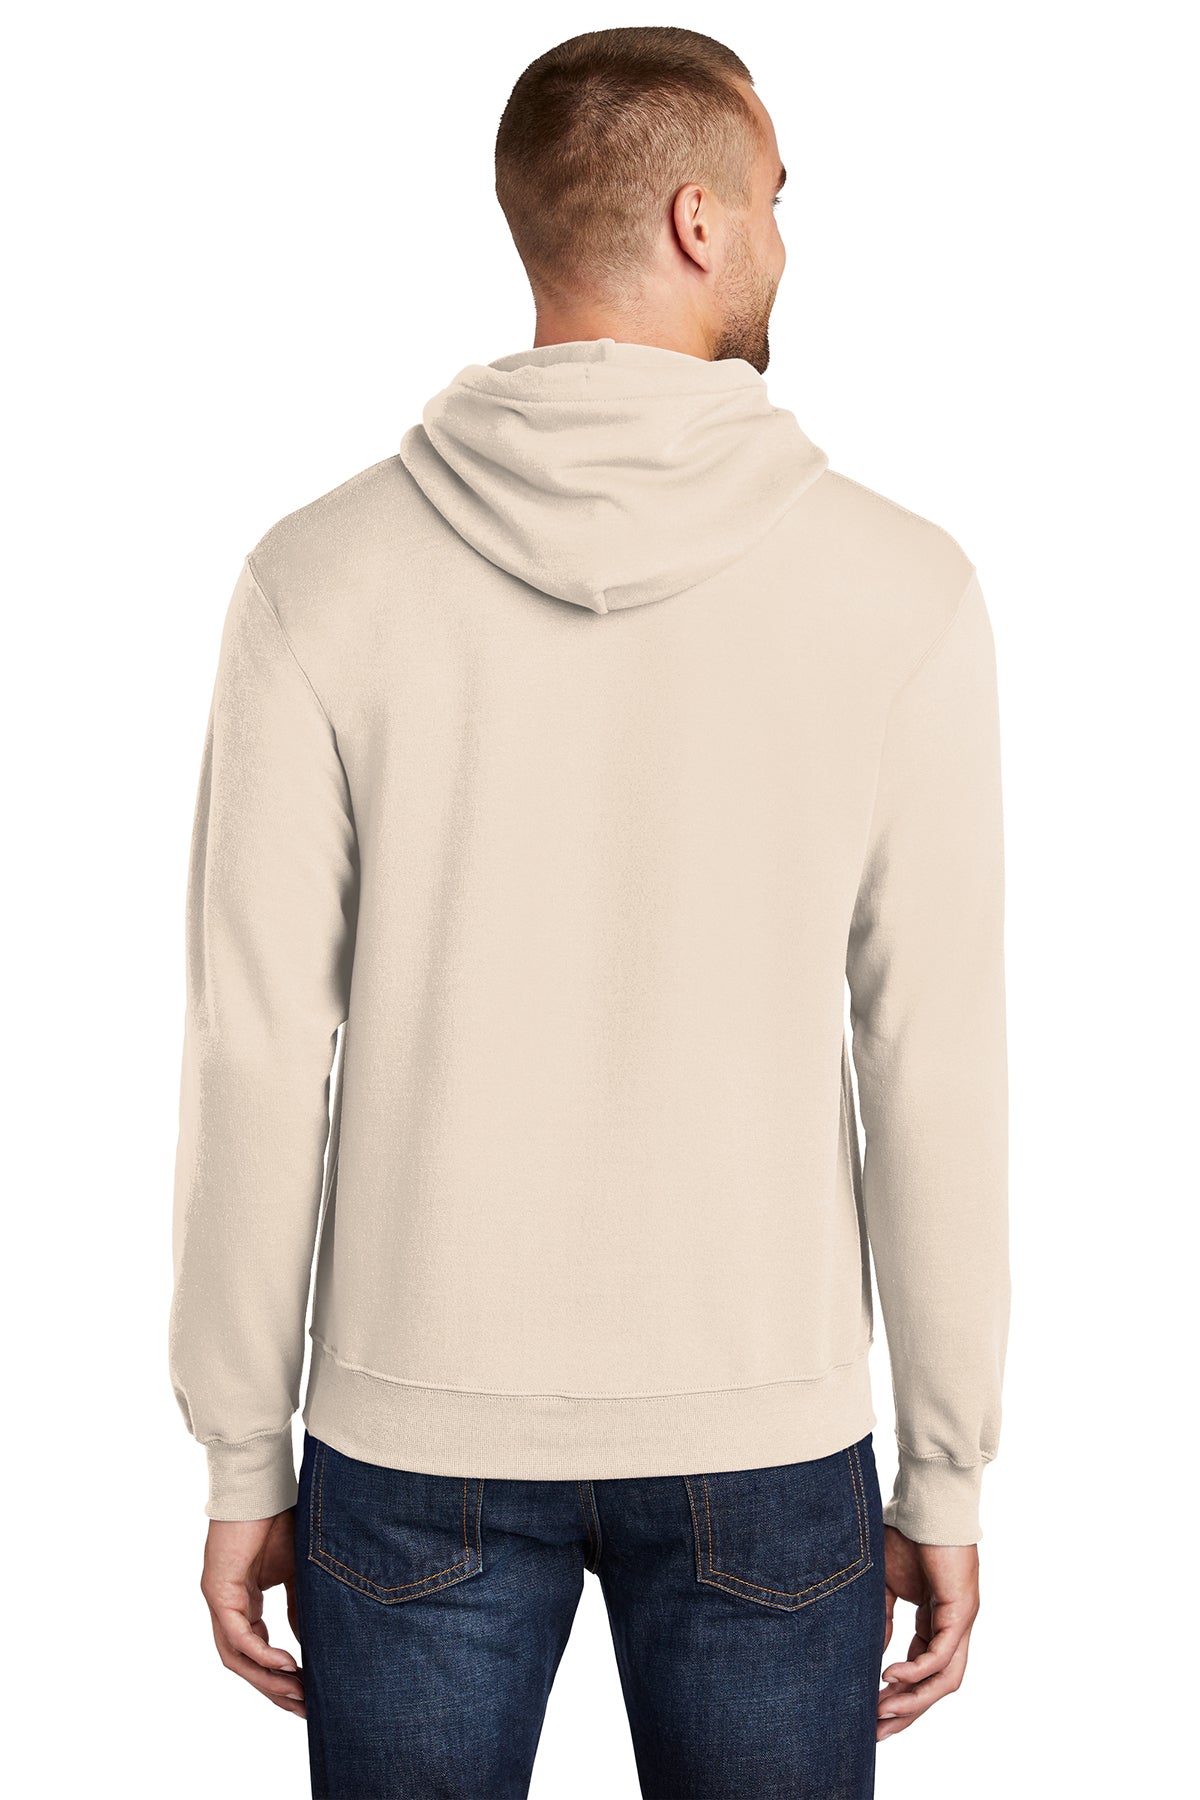 Port & Company PC78H Mens Core Fleece Hooded Sweatshirt Hoodie Natural Back